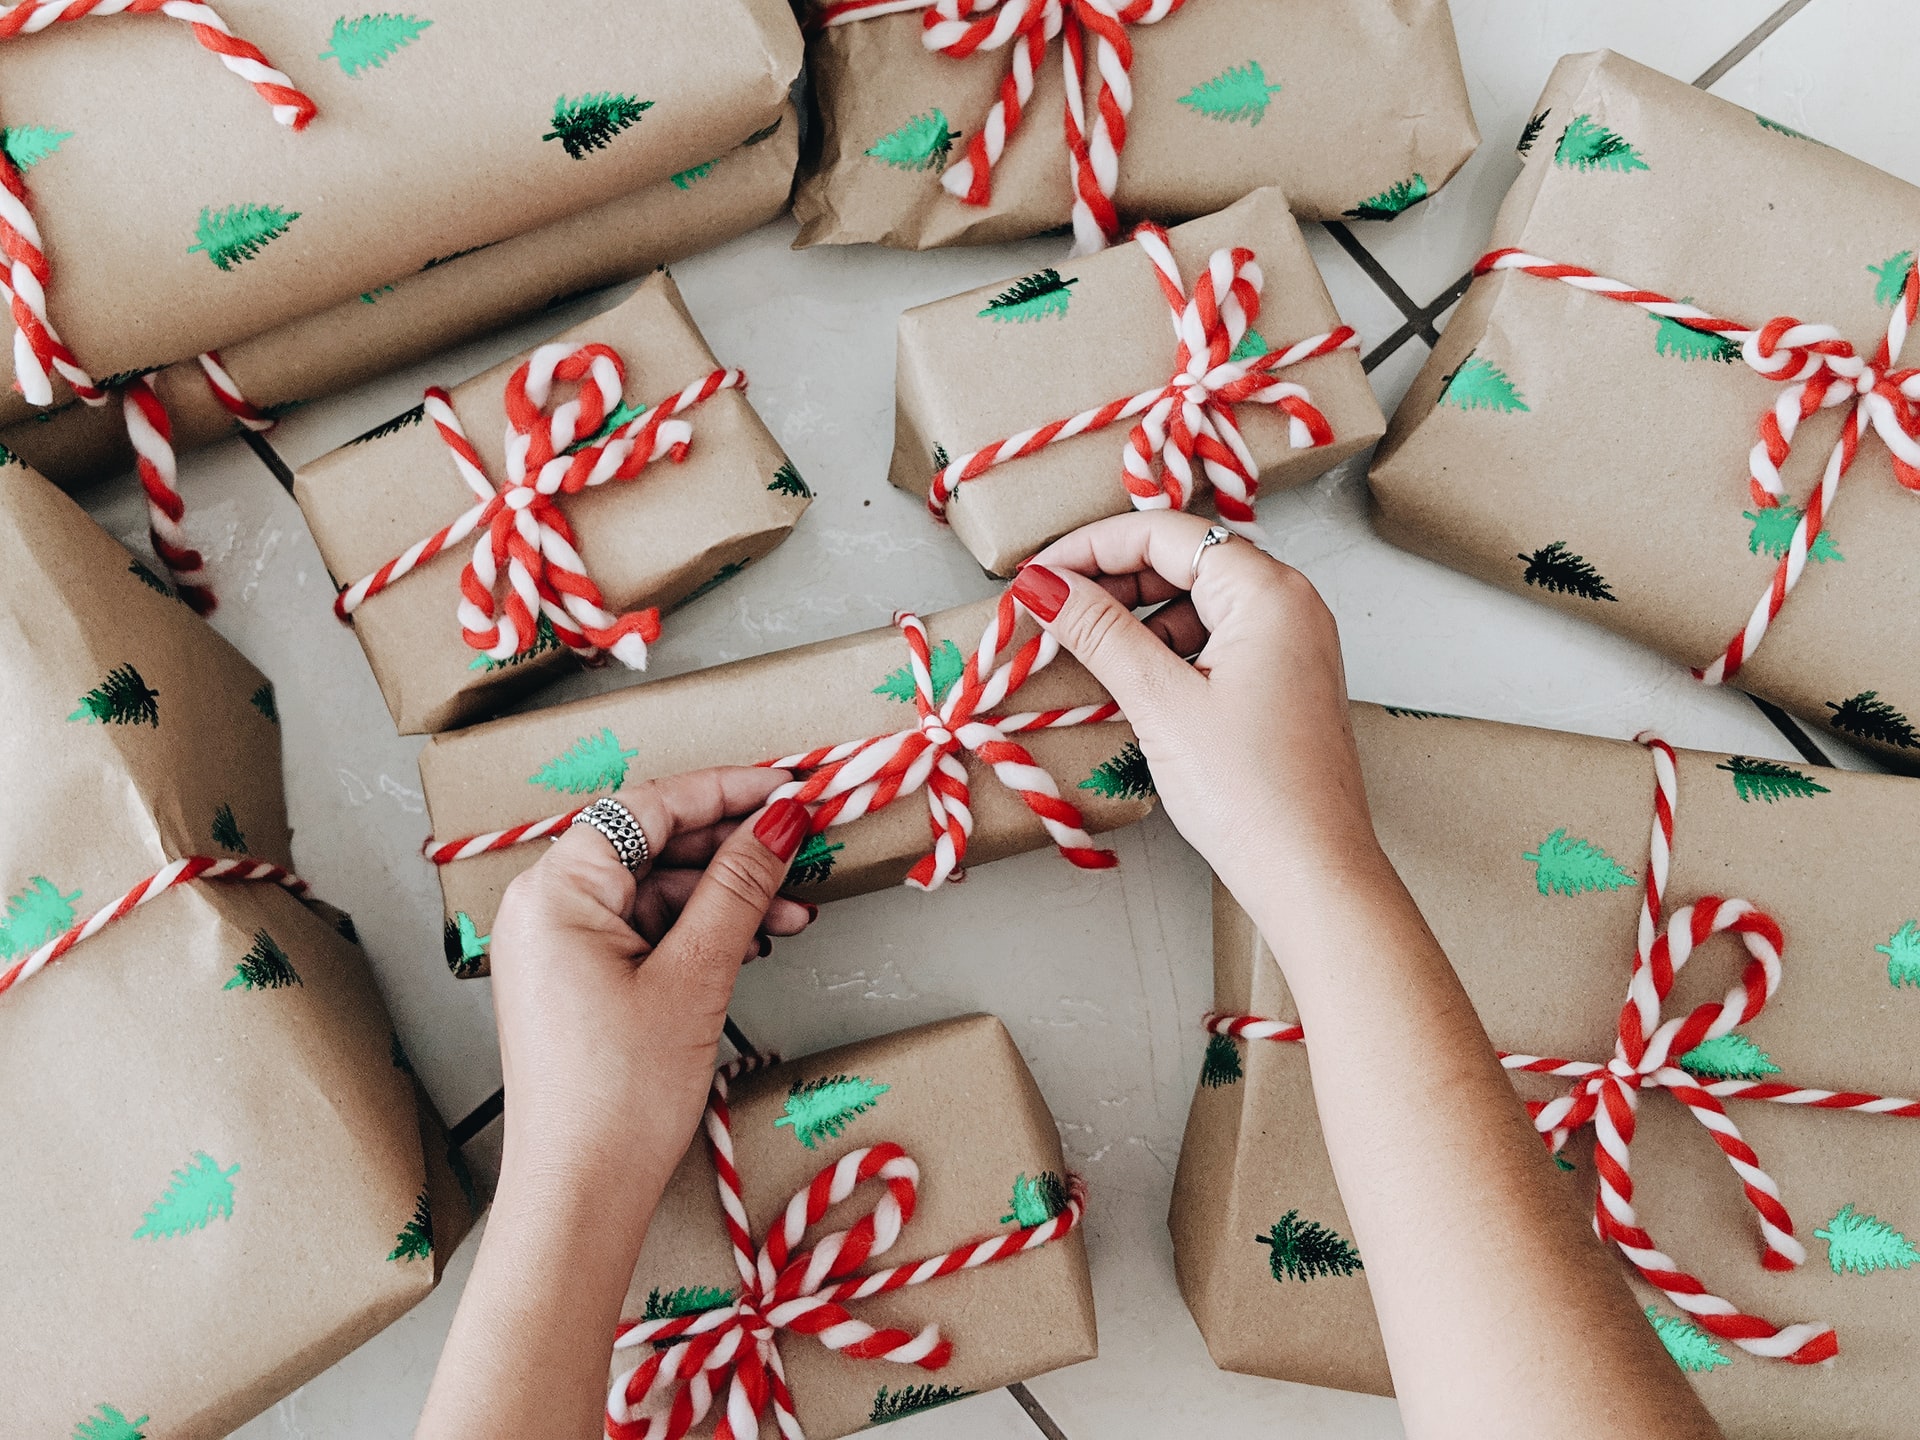 Why support social entrepreneurs in the Christmas season?